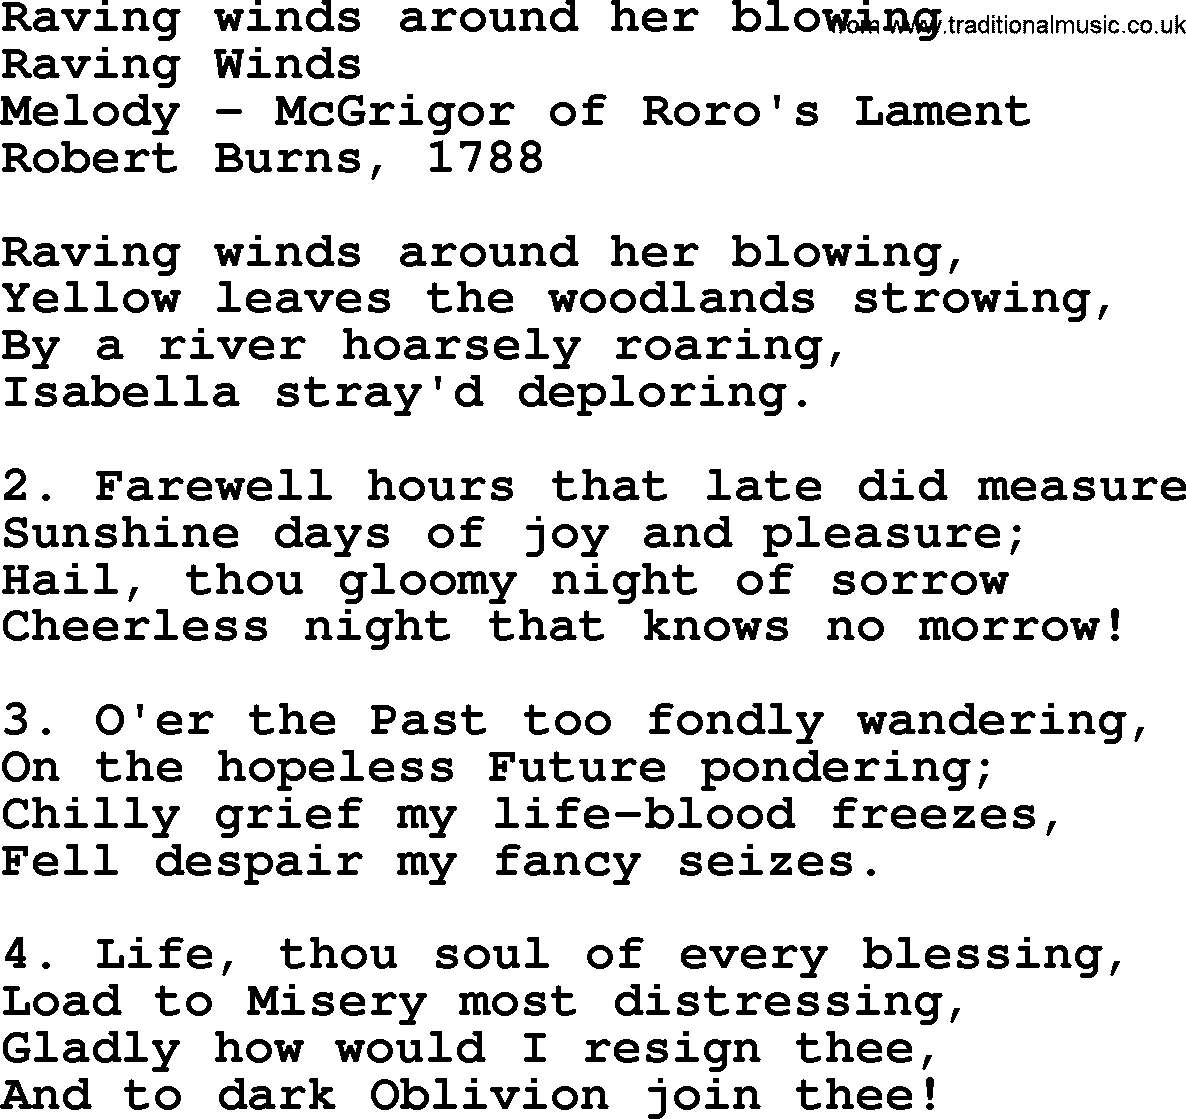 Robert Burns Songs & Lyrics: Raving Winds Around Her Blowing